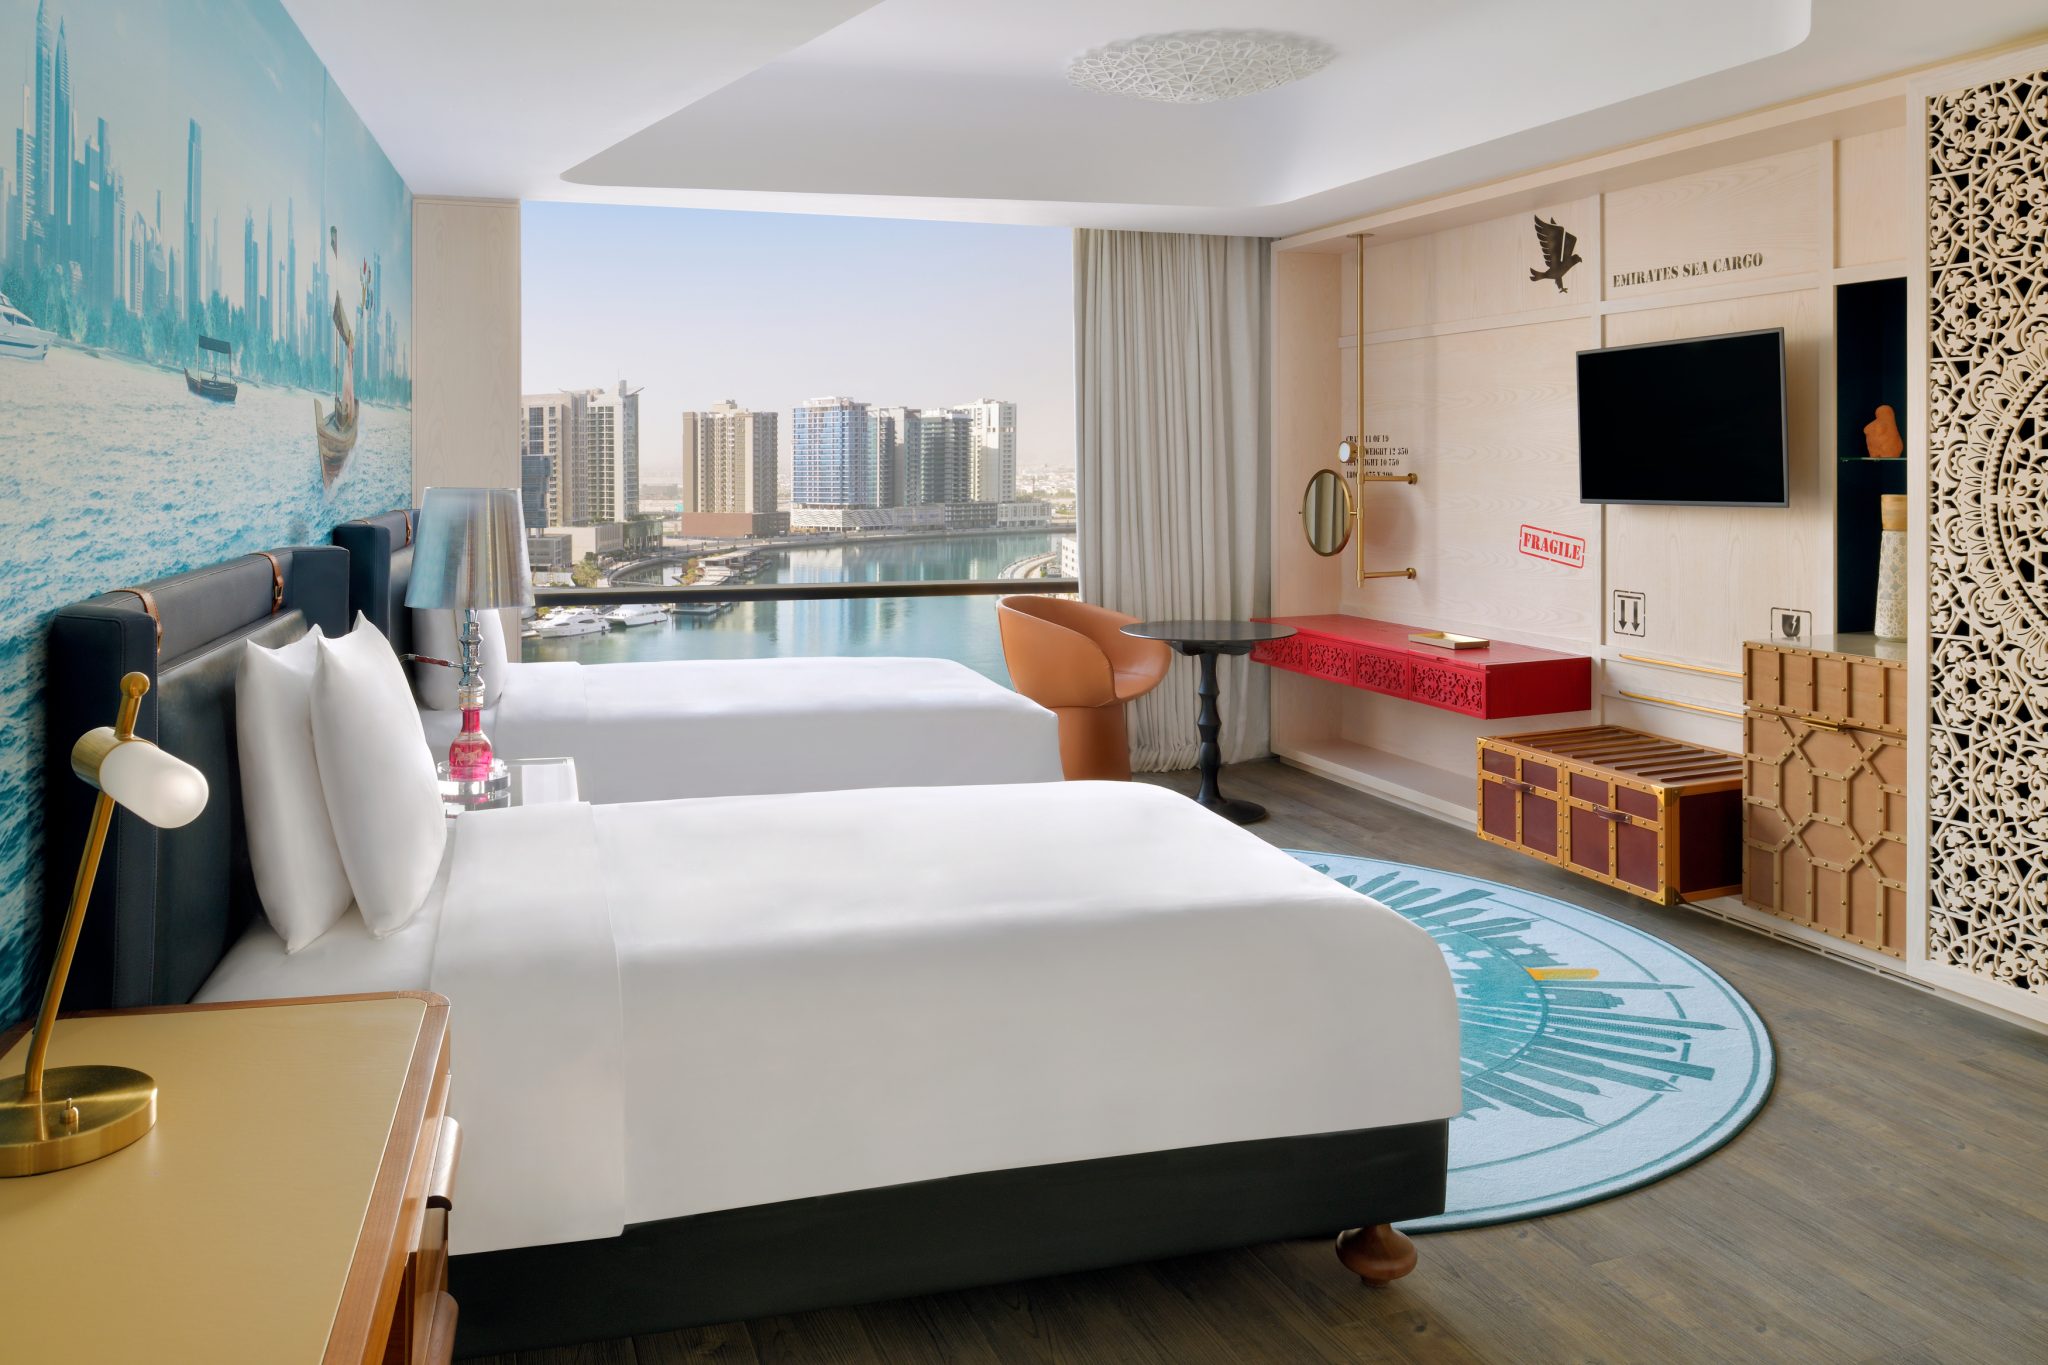 فندق هوتيل إنديجو دبي داون تاون يفتتح أبوايه رسمياًُ في دبي